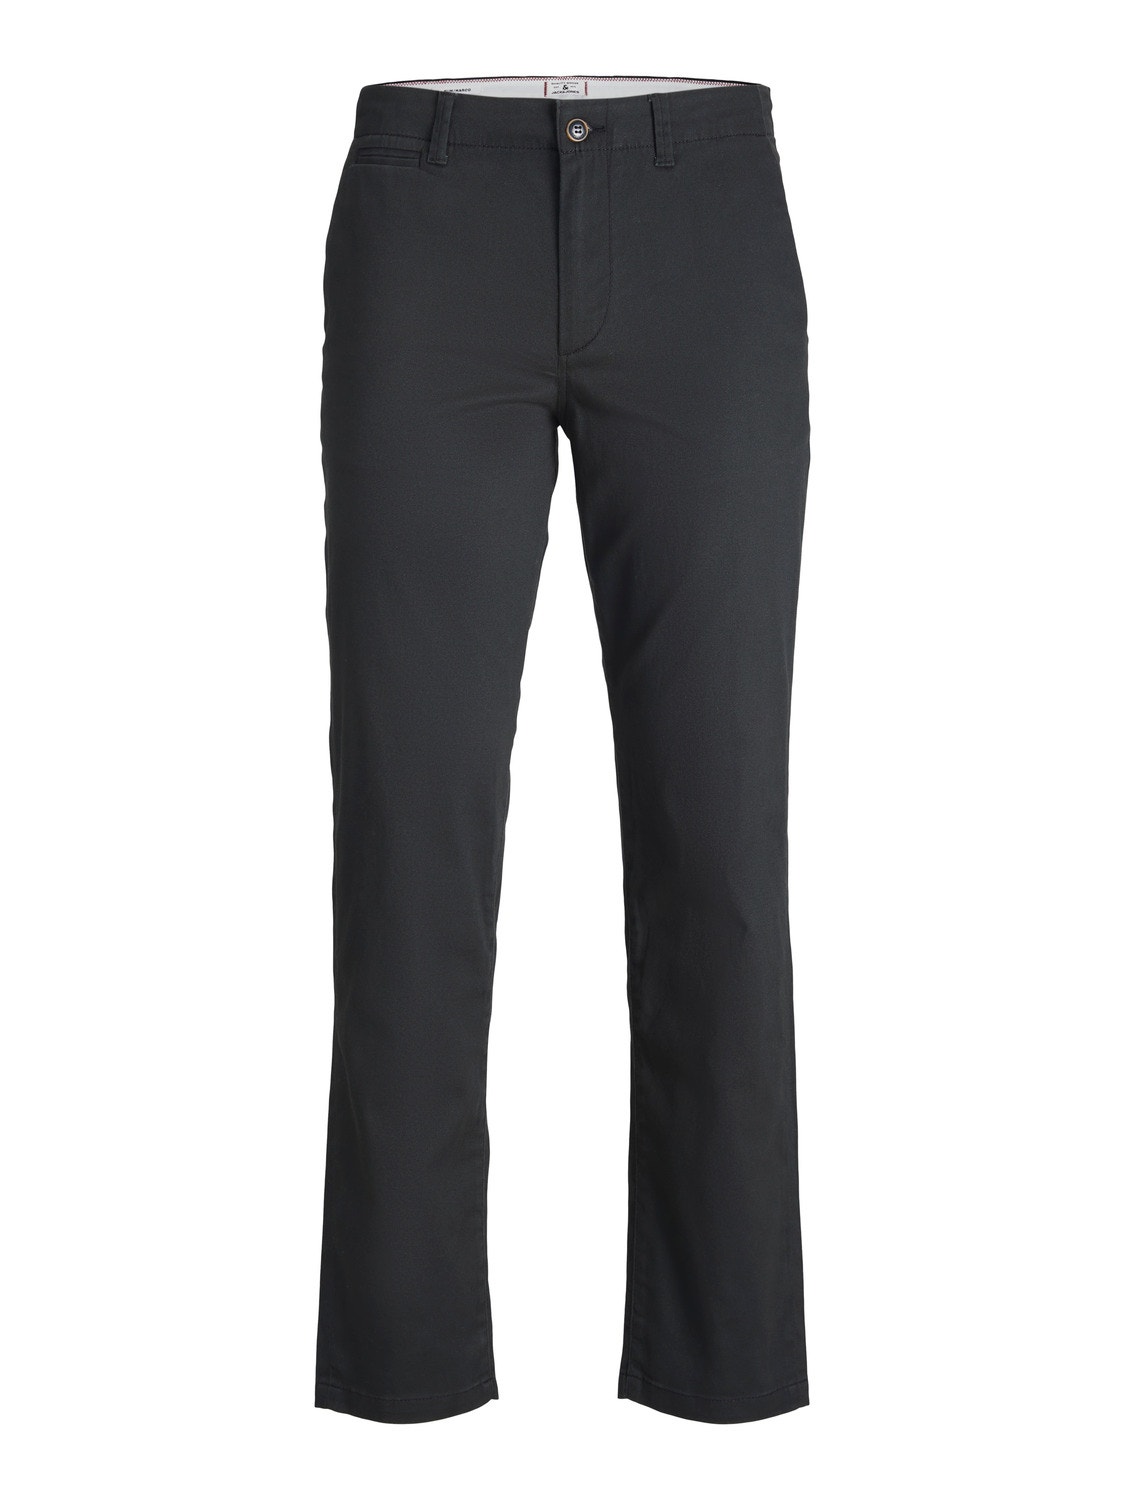 Jack & Jones Slim Fit 5-pocket trousers -Black - 12234107